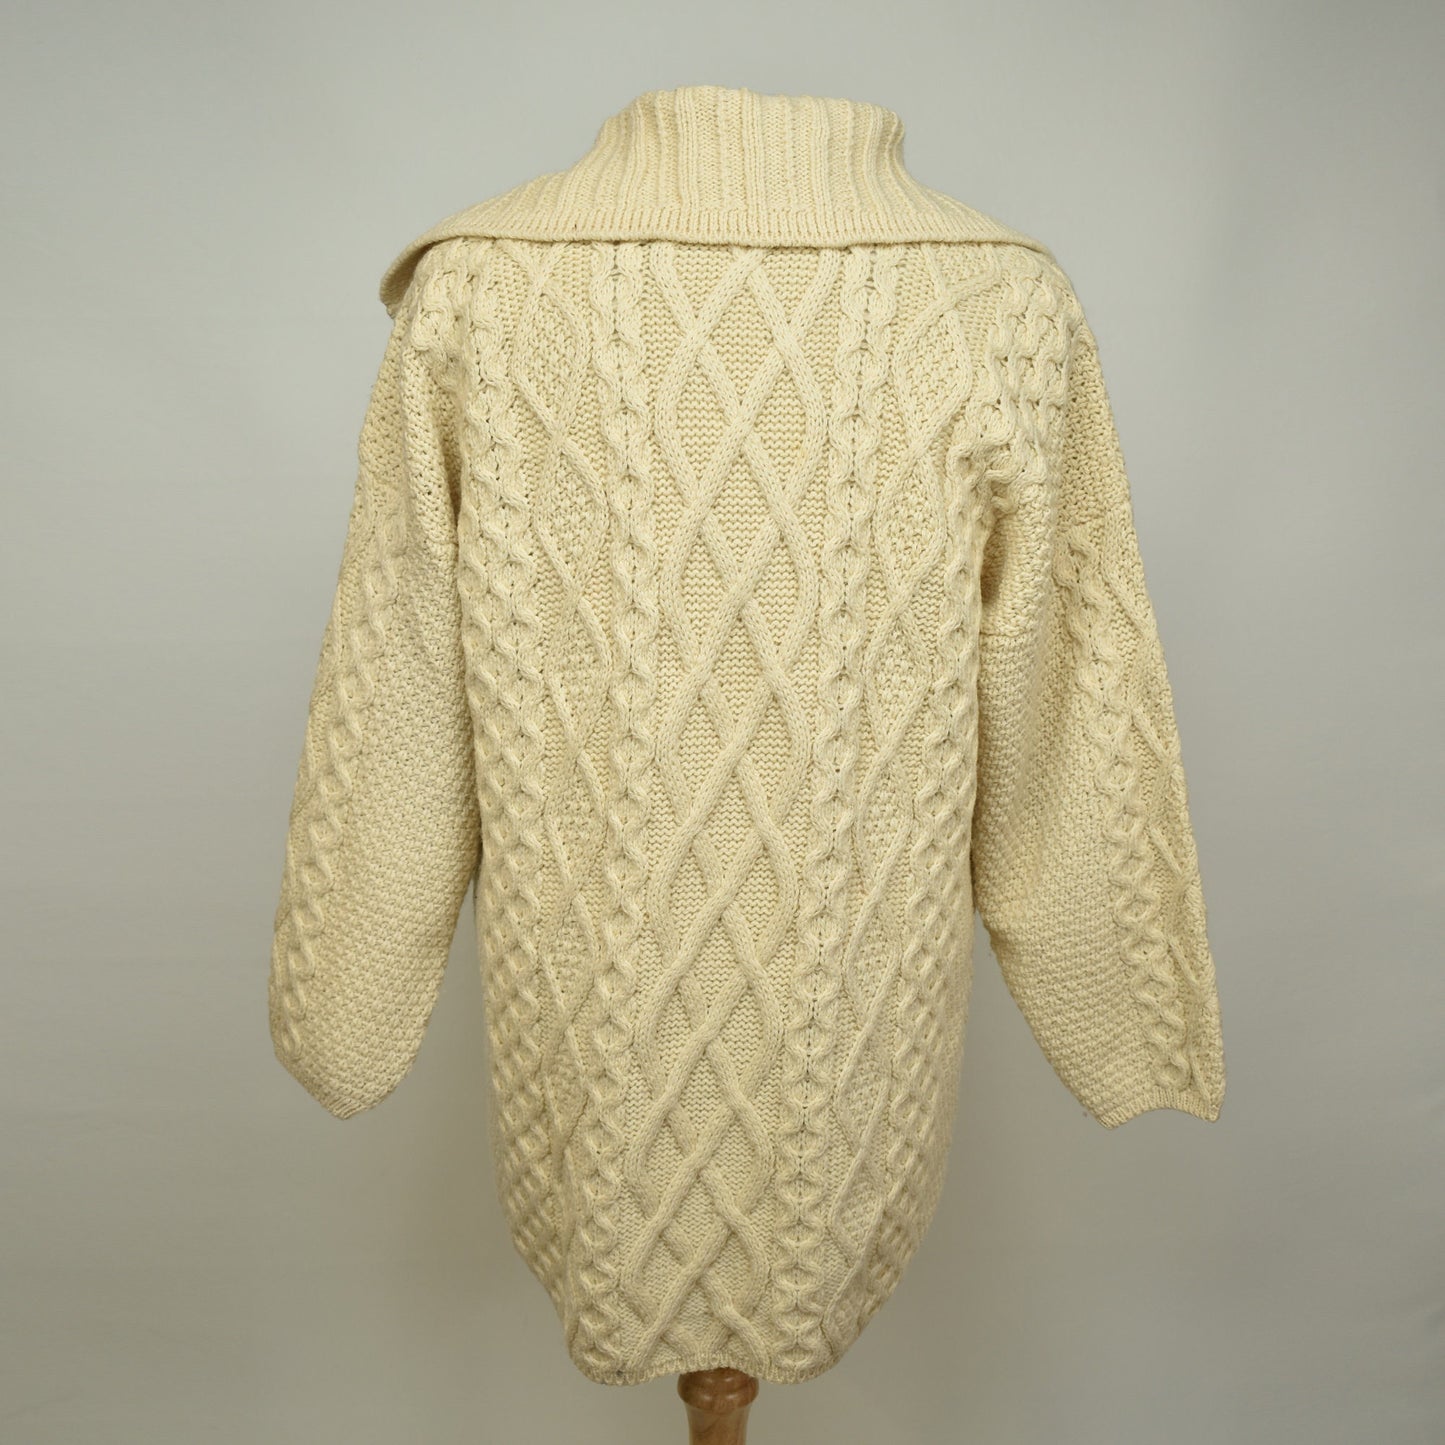 Vintage 70s Aran Irish Knit Long Cardigan Sweater by Pallas - Handloomed in Ireland - Wood Toggle Buttons - Deep Pockets